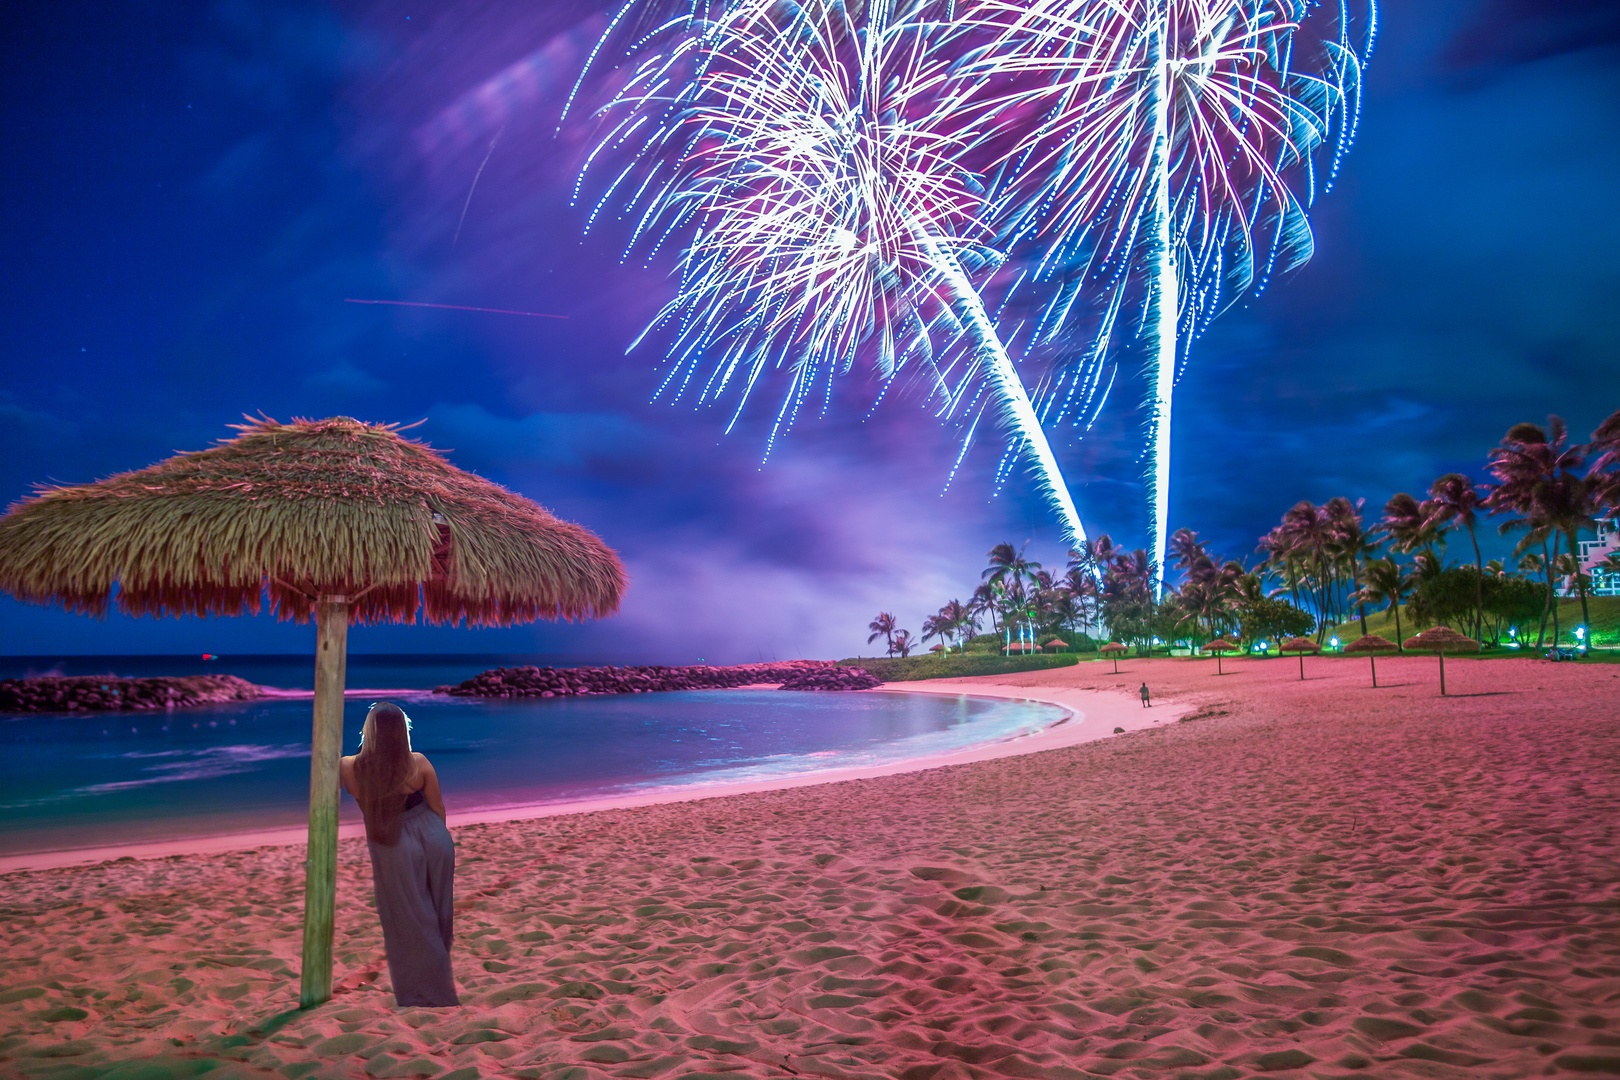 Kapolei Vacation Rentals, Ko Olina Kai 1033C - An evening of fireworks at the lagoon.